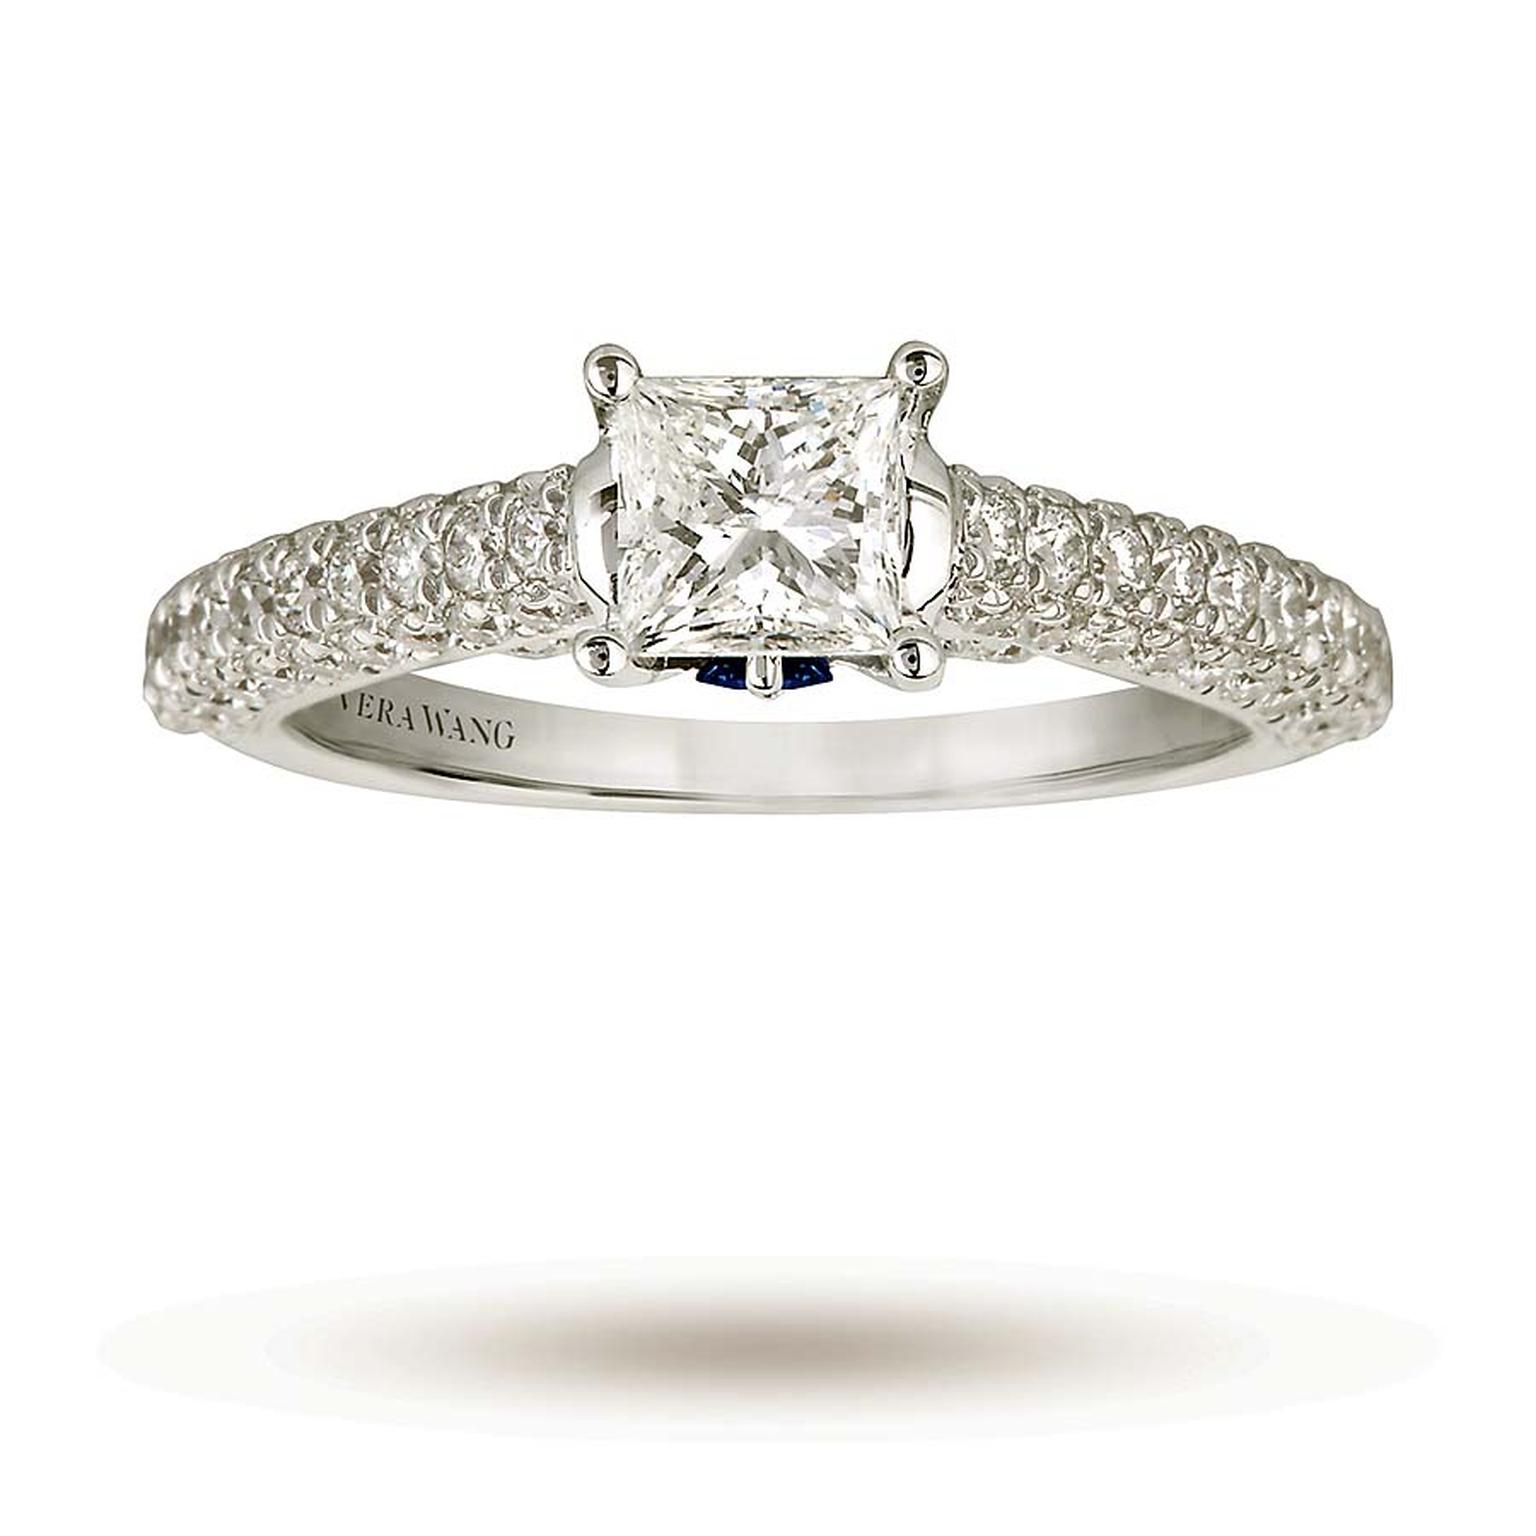 Vera Wang princess-cut diamond engagement ring with a pavé band (£6,000).